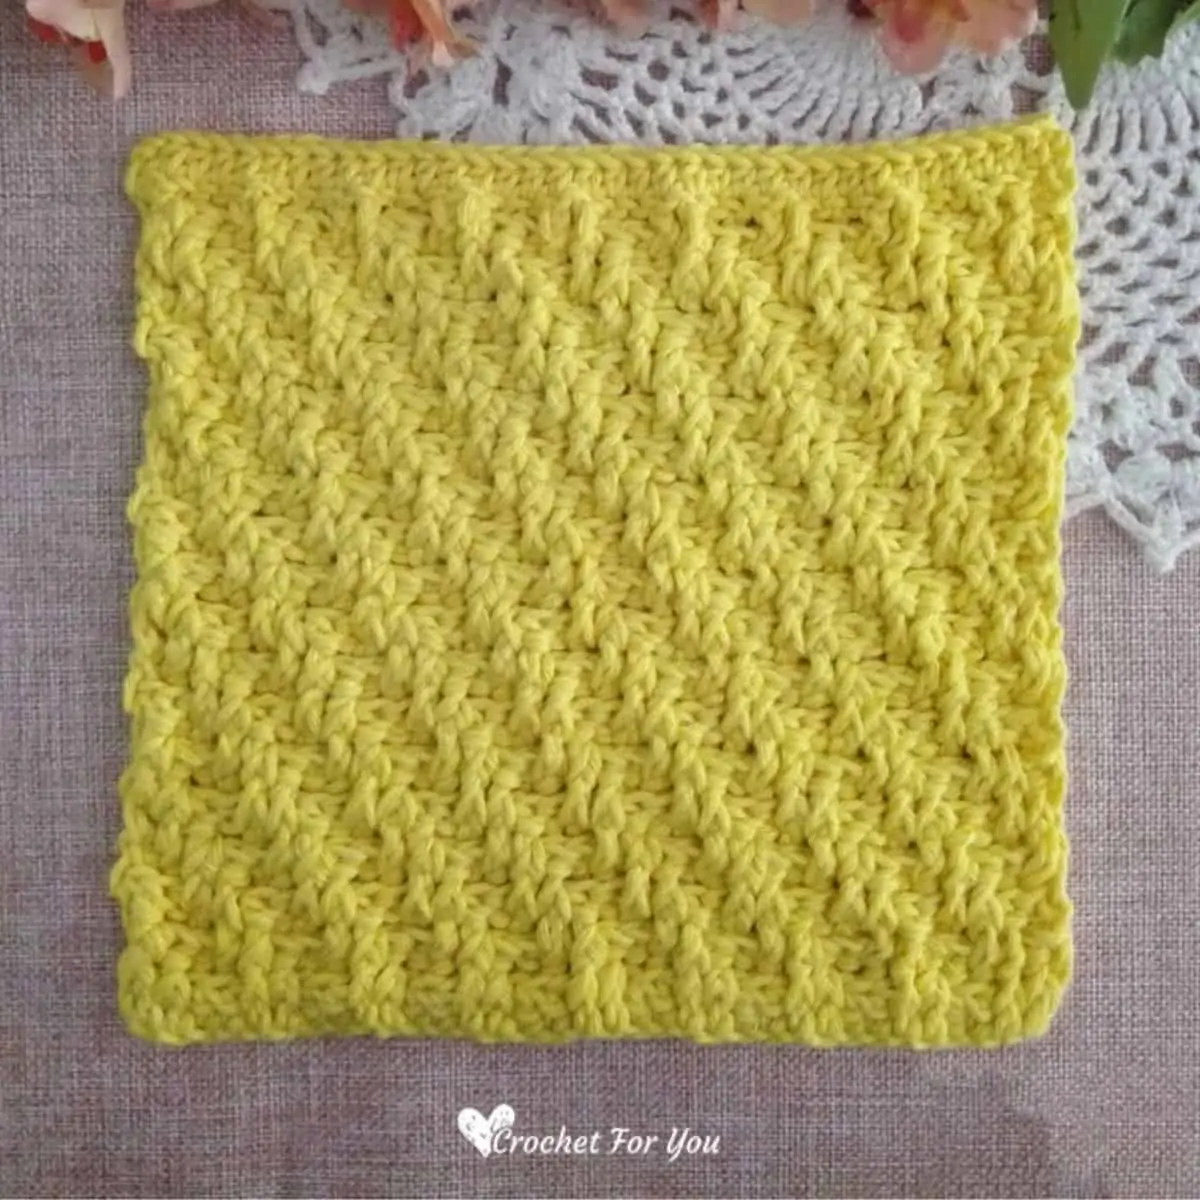 yellow crochet square dishcloth with raised stitches